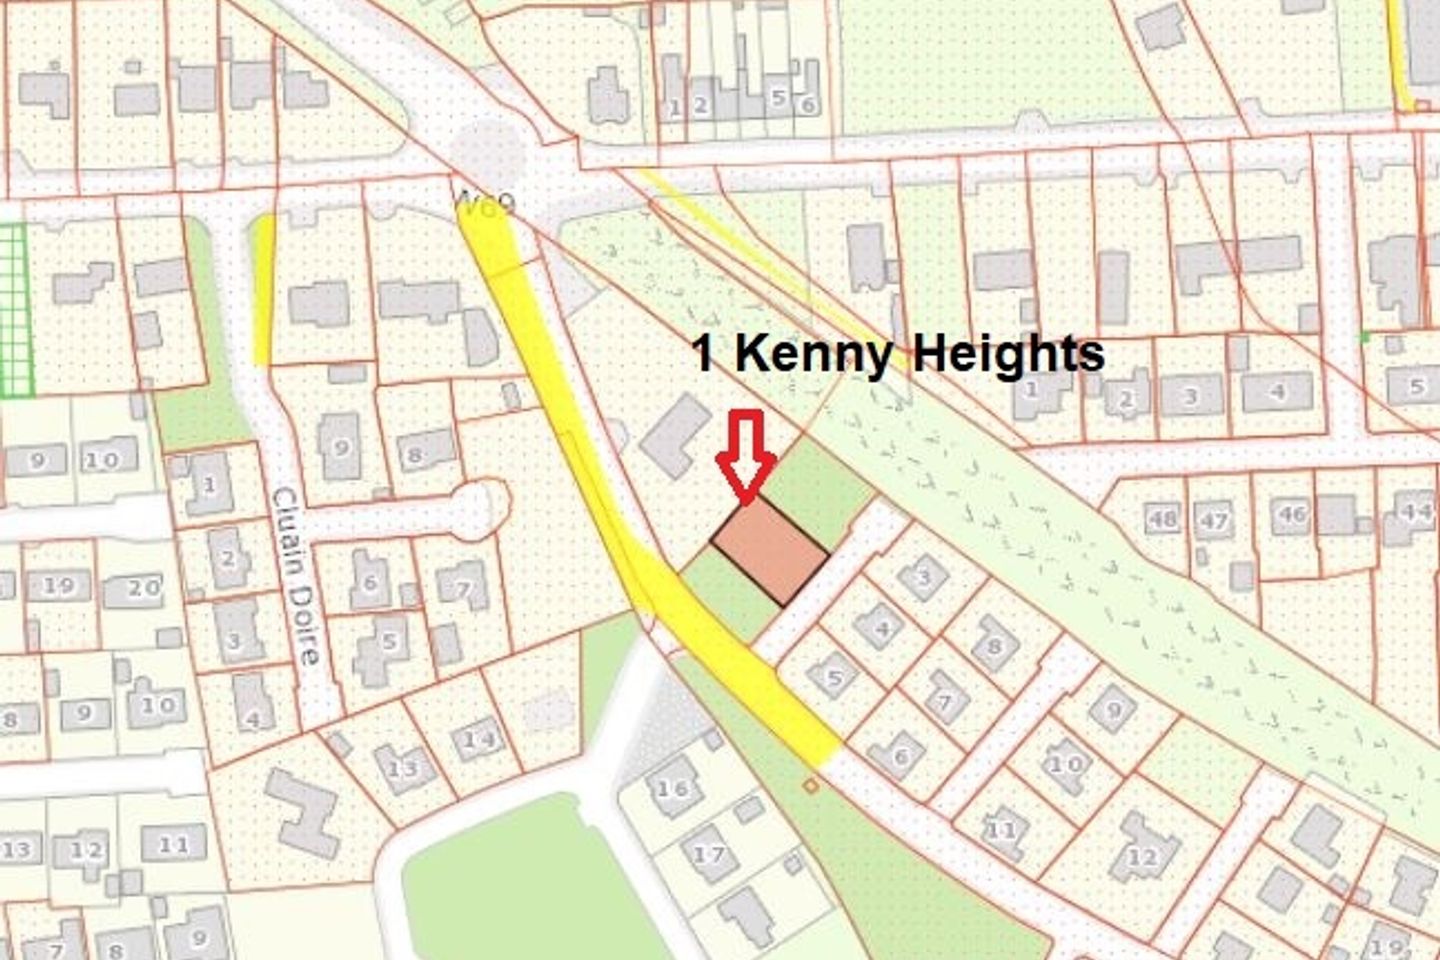 No 1 Kenny Heights, Listowel, Co. Kerry